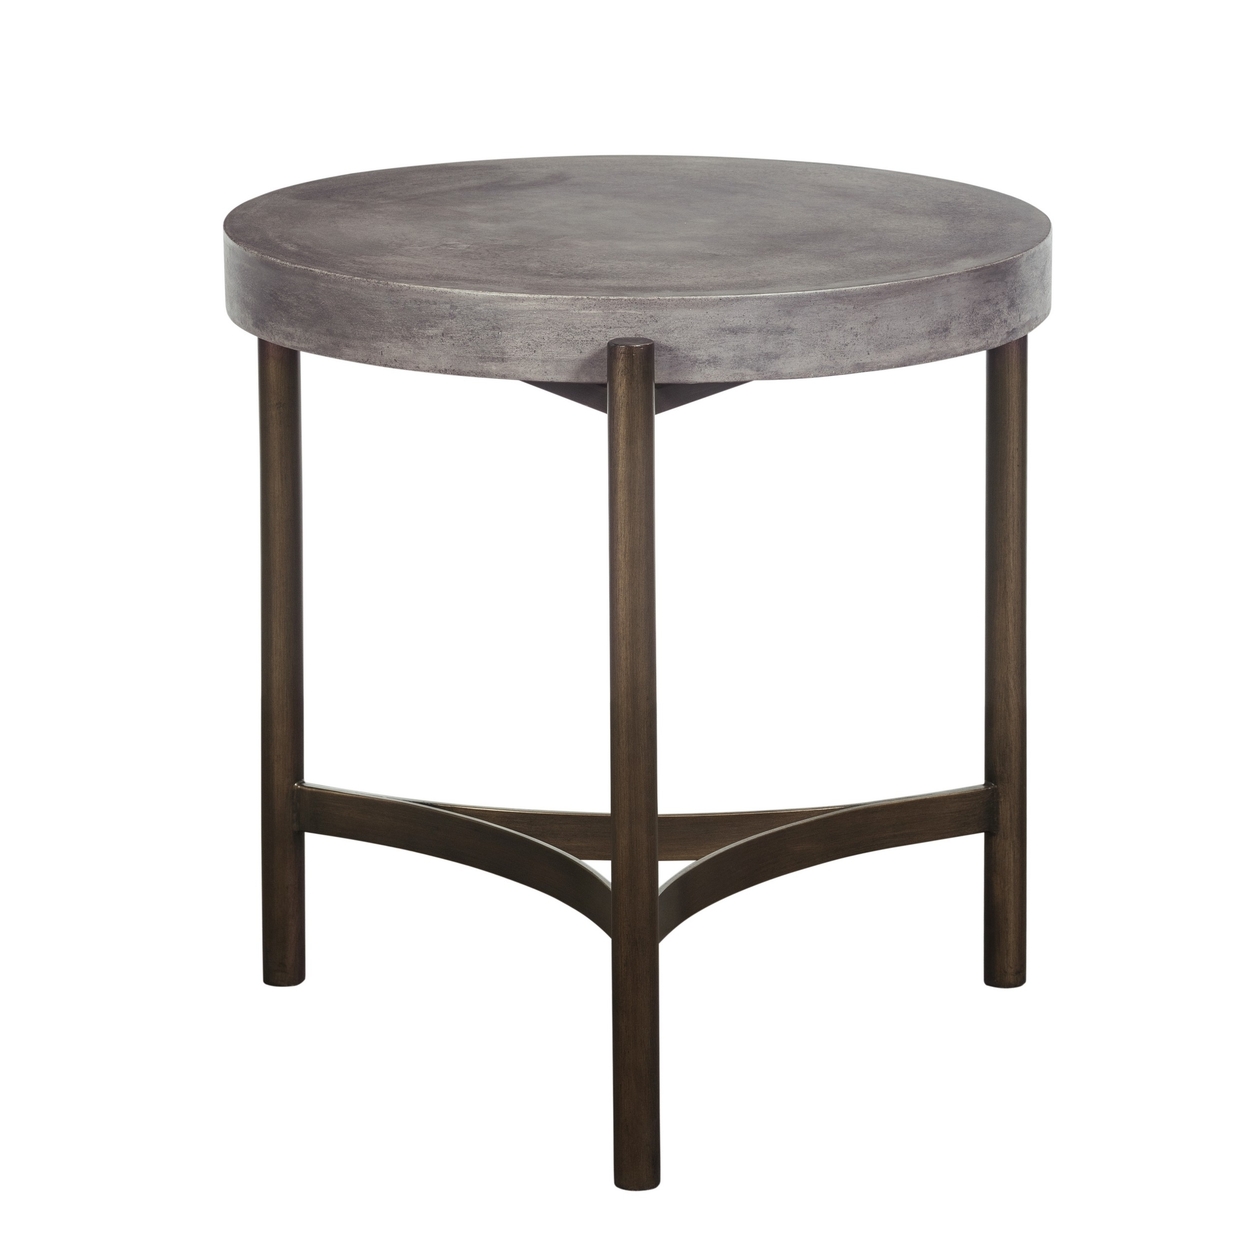 23 Inch Round Side End Table, Fibre Concrete Surface, Steel Base, Gray - Saltoro Sherpi